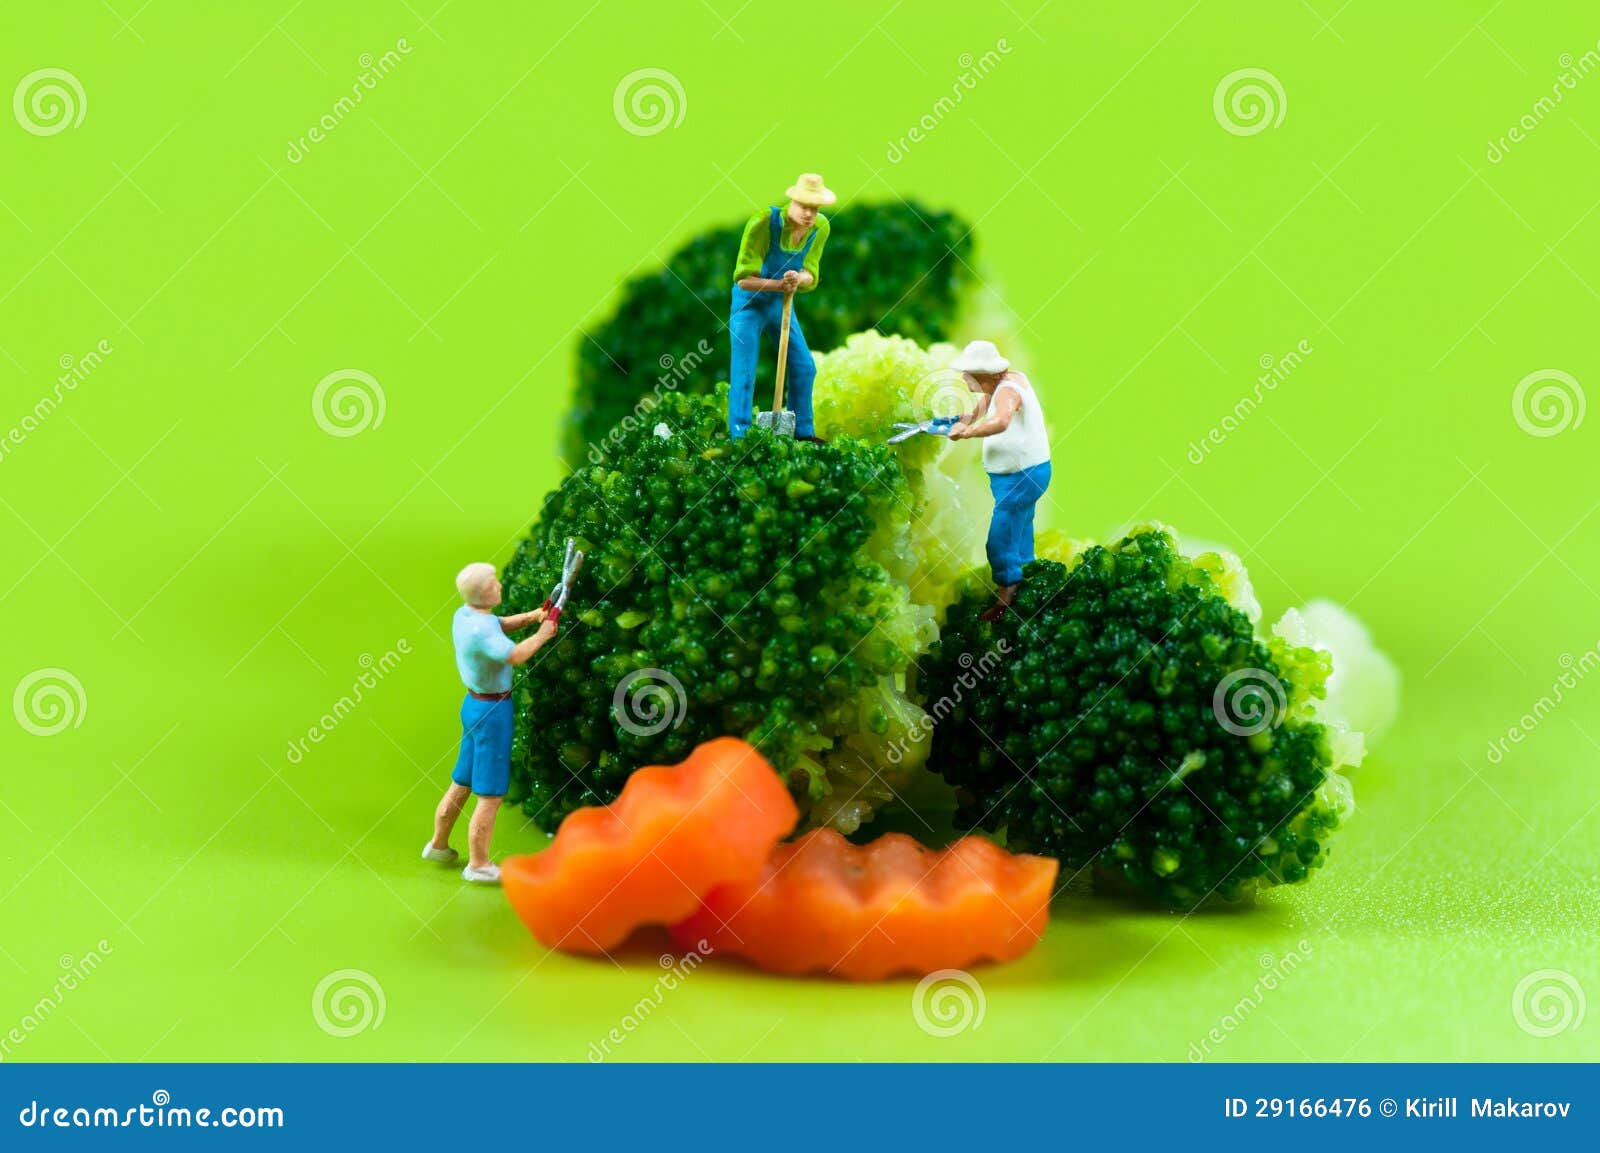 figurine farmers harvesting broccoli